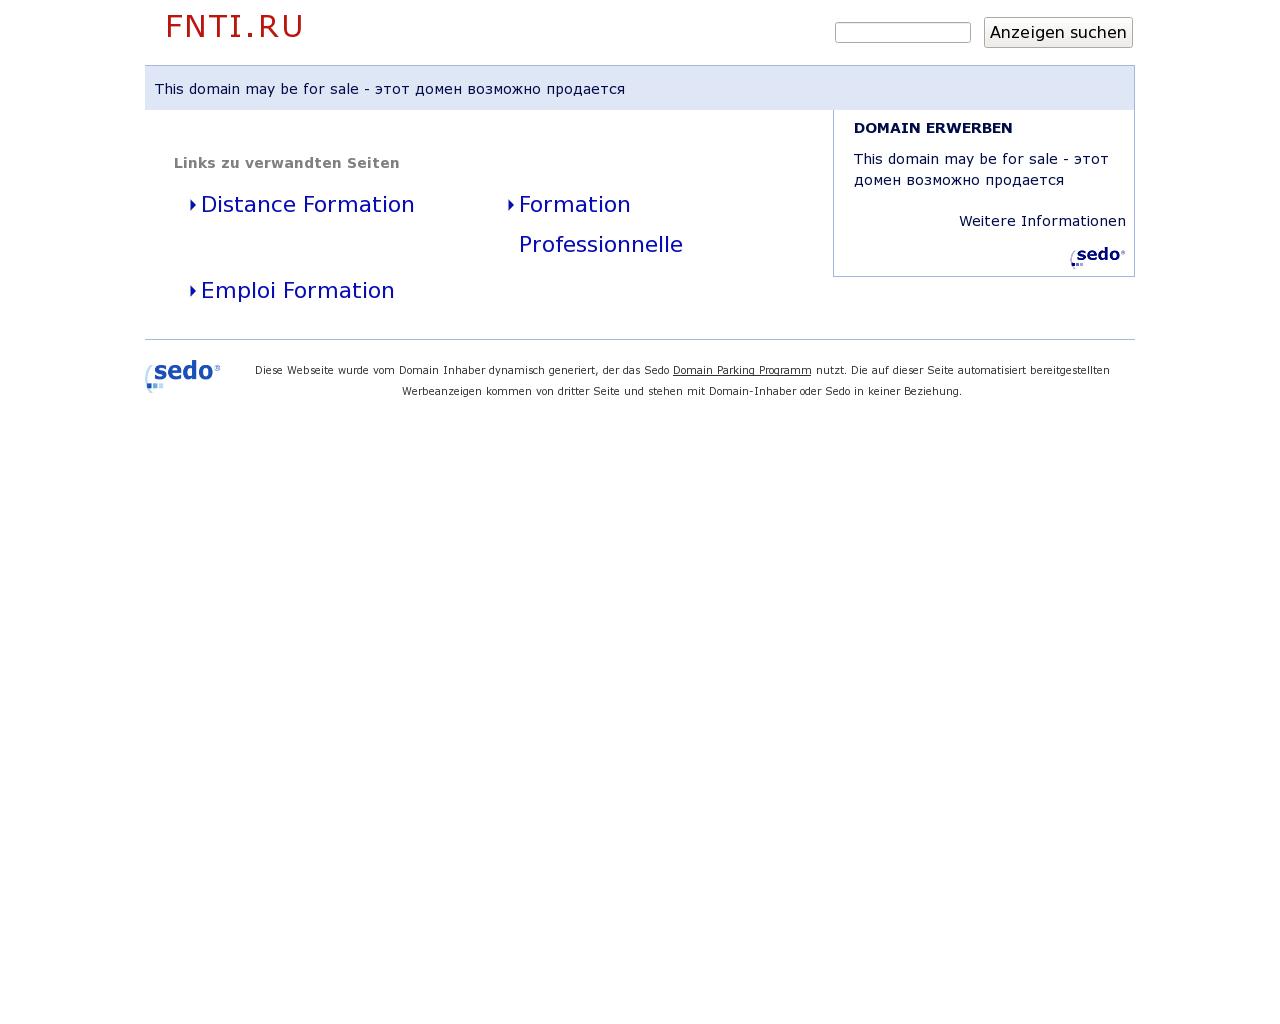 Изображение сайта fnti.ru в разрешении 1280x1024